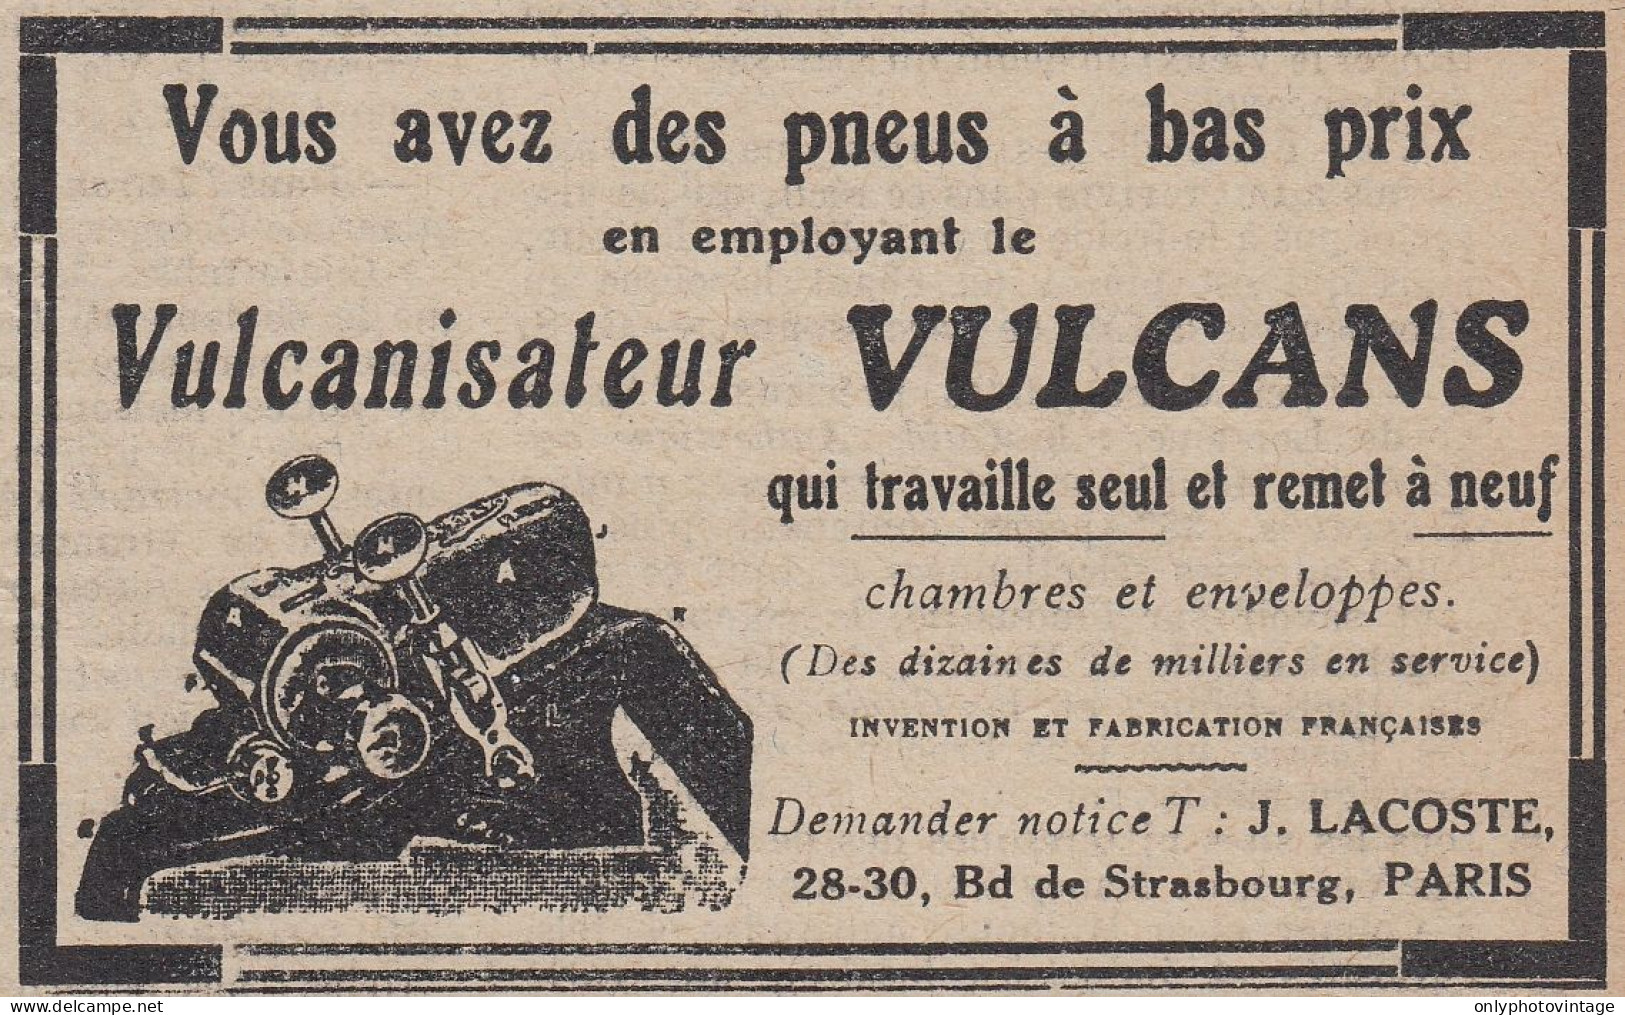 Vulcanisateur VULCANS - 1920 Vintage Advertising - Pubblicit� Epoca - Advertising